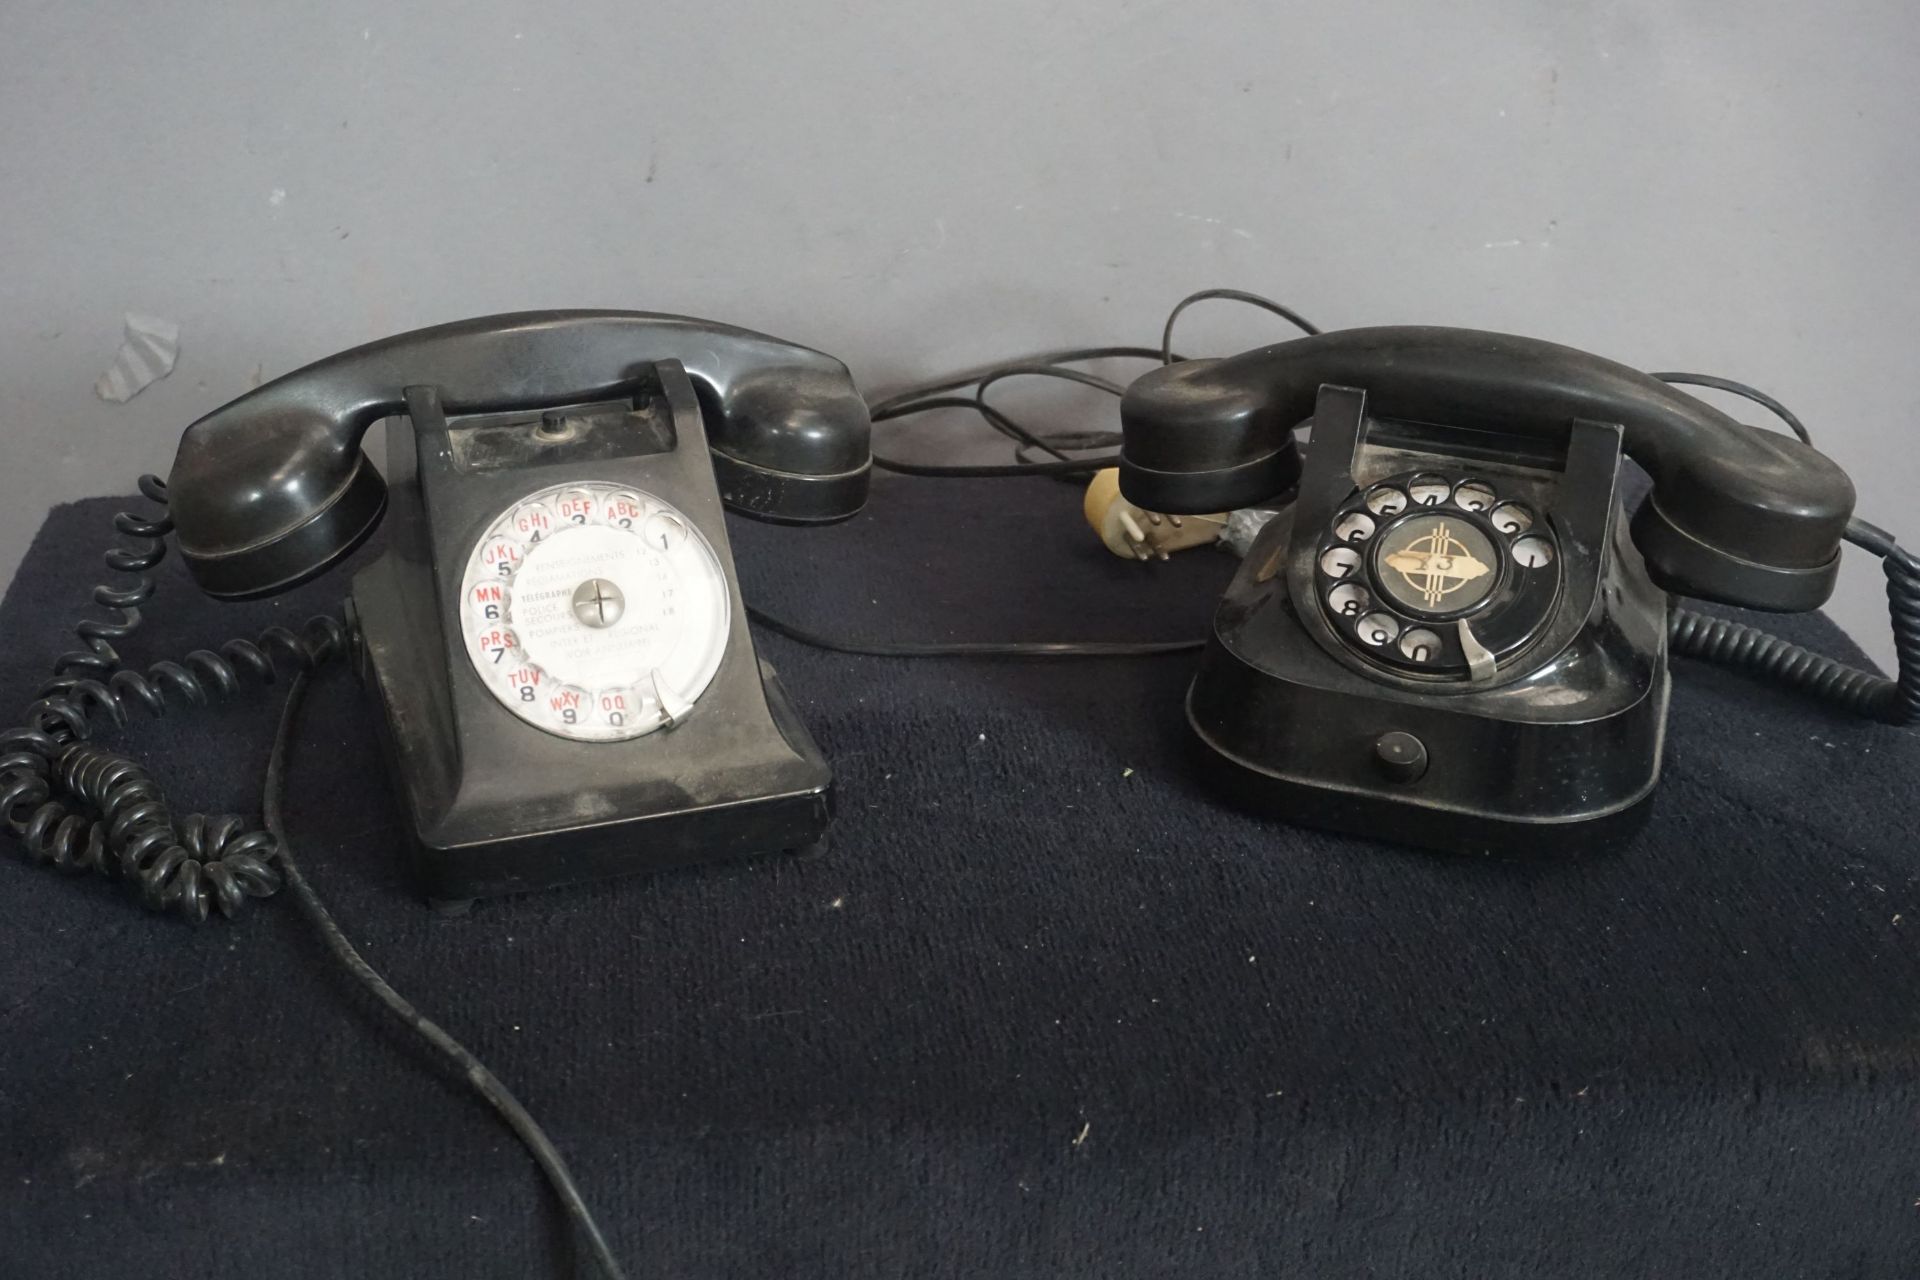 Couple of old telephones in Bakelite